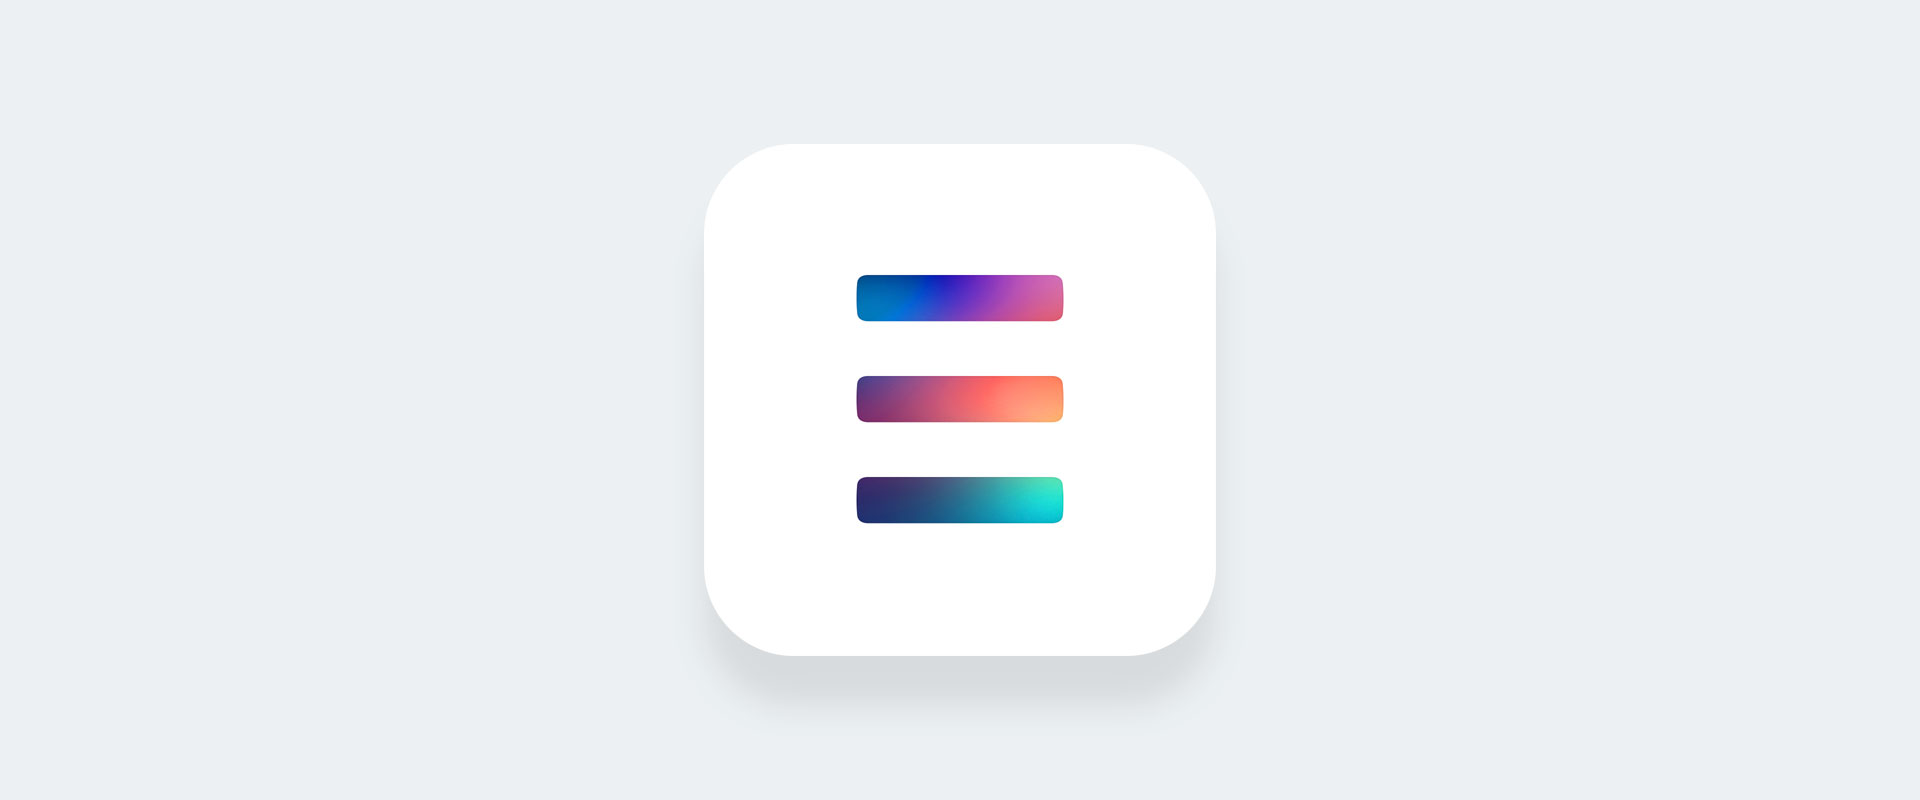 Splyce app logo with background